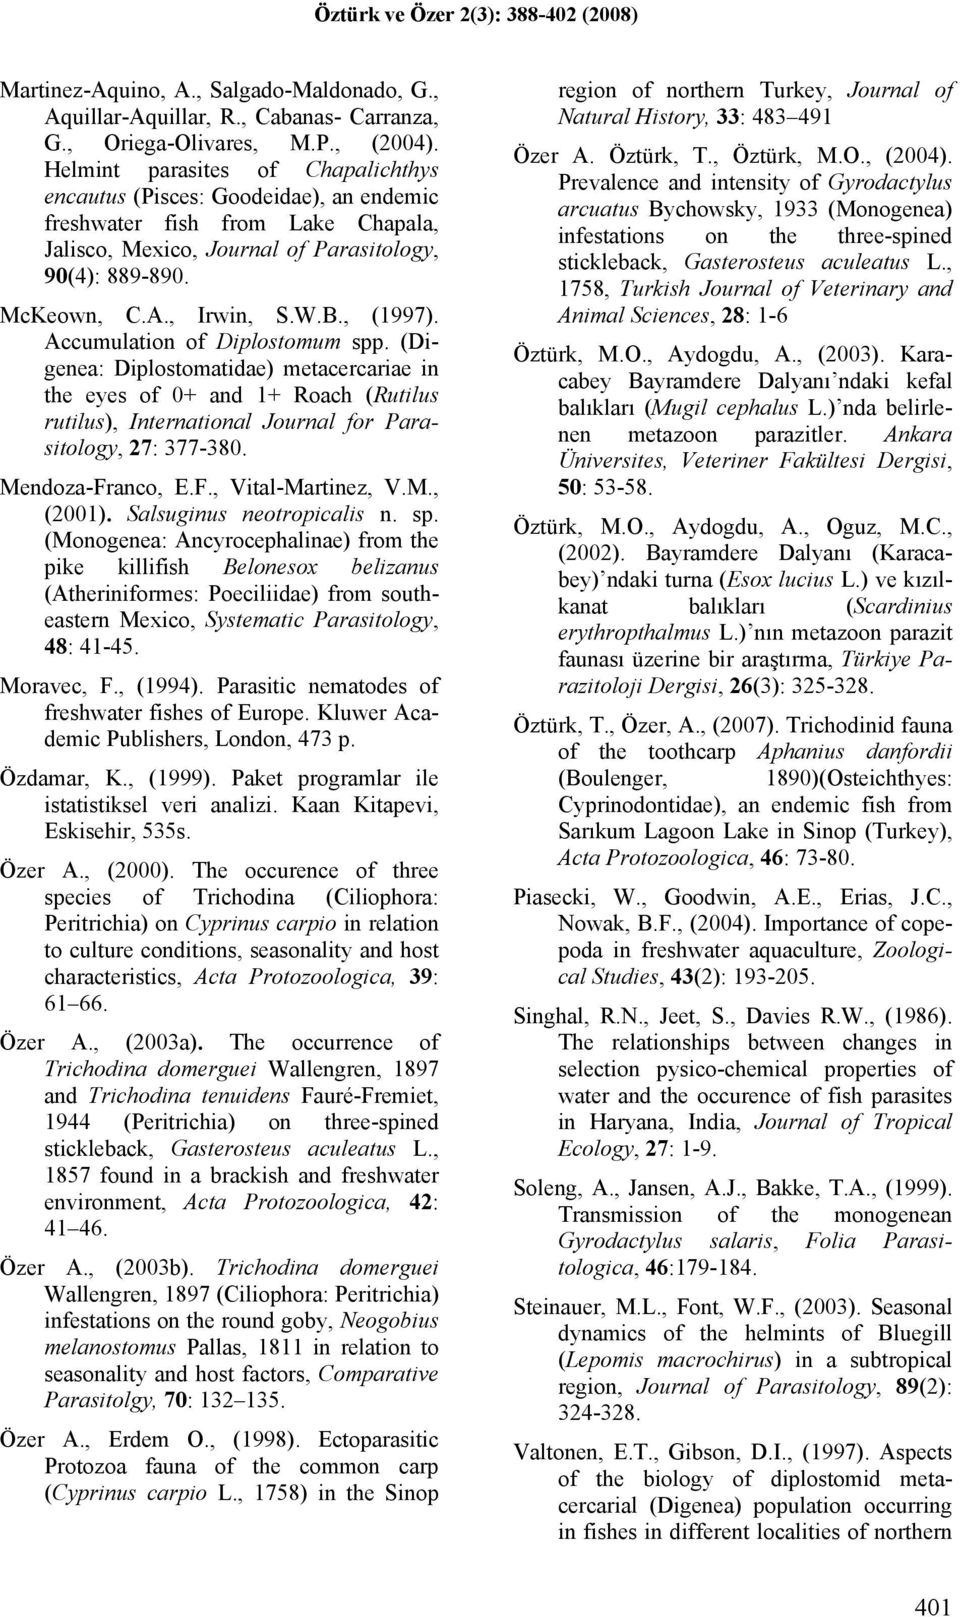 , (1997). Accumulation of Diplostomum spp. (Digenea: Diplostomatidae) metacercariae in the eyes of 0+ and 1+ Roach (Rutilus rutilus), International Journal for Parasitology, 27: 377-380.